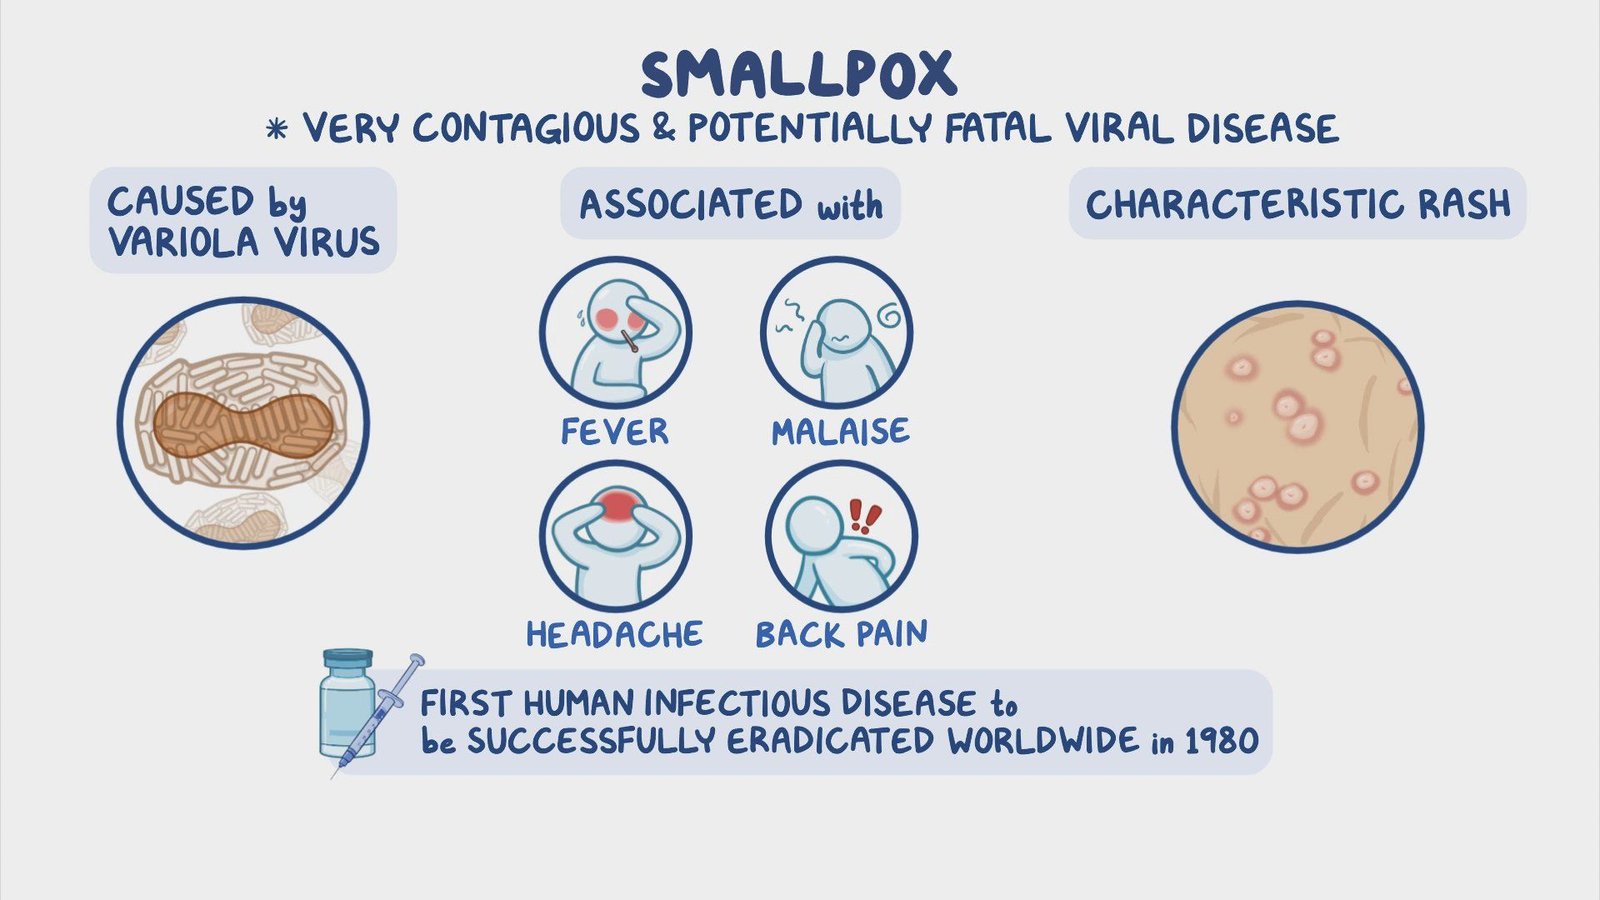  chickenpox versus Smallpox